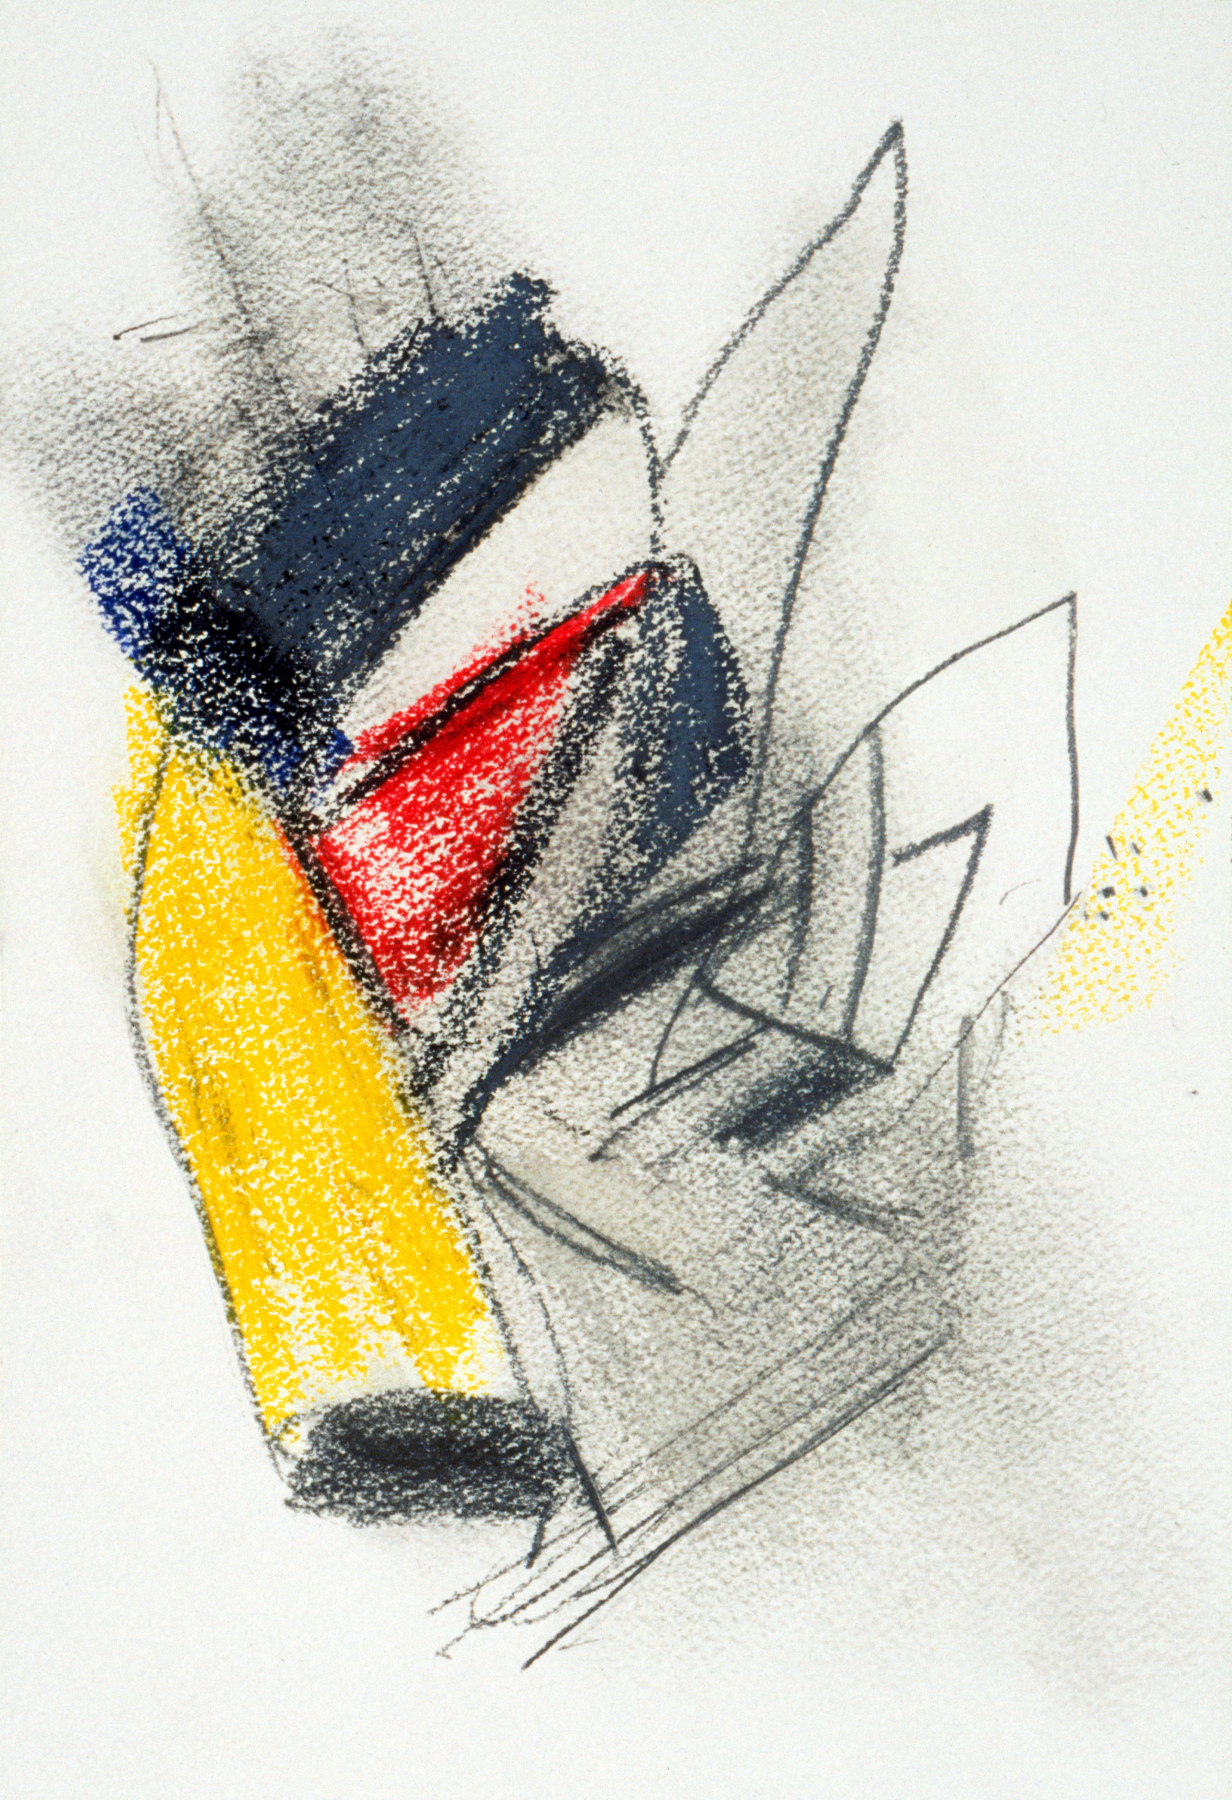 Don Van Vliet
&amp;quot;Untitled&amp;quot;, 1985
Charcoal, crayon, colored pencil on paper
10 x 7 inches
25.5 x 18 cm
VLZ 470